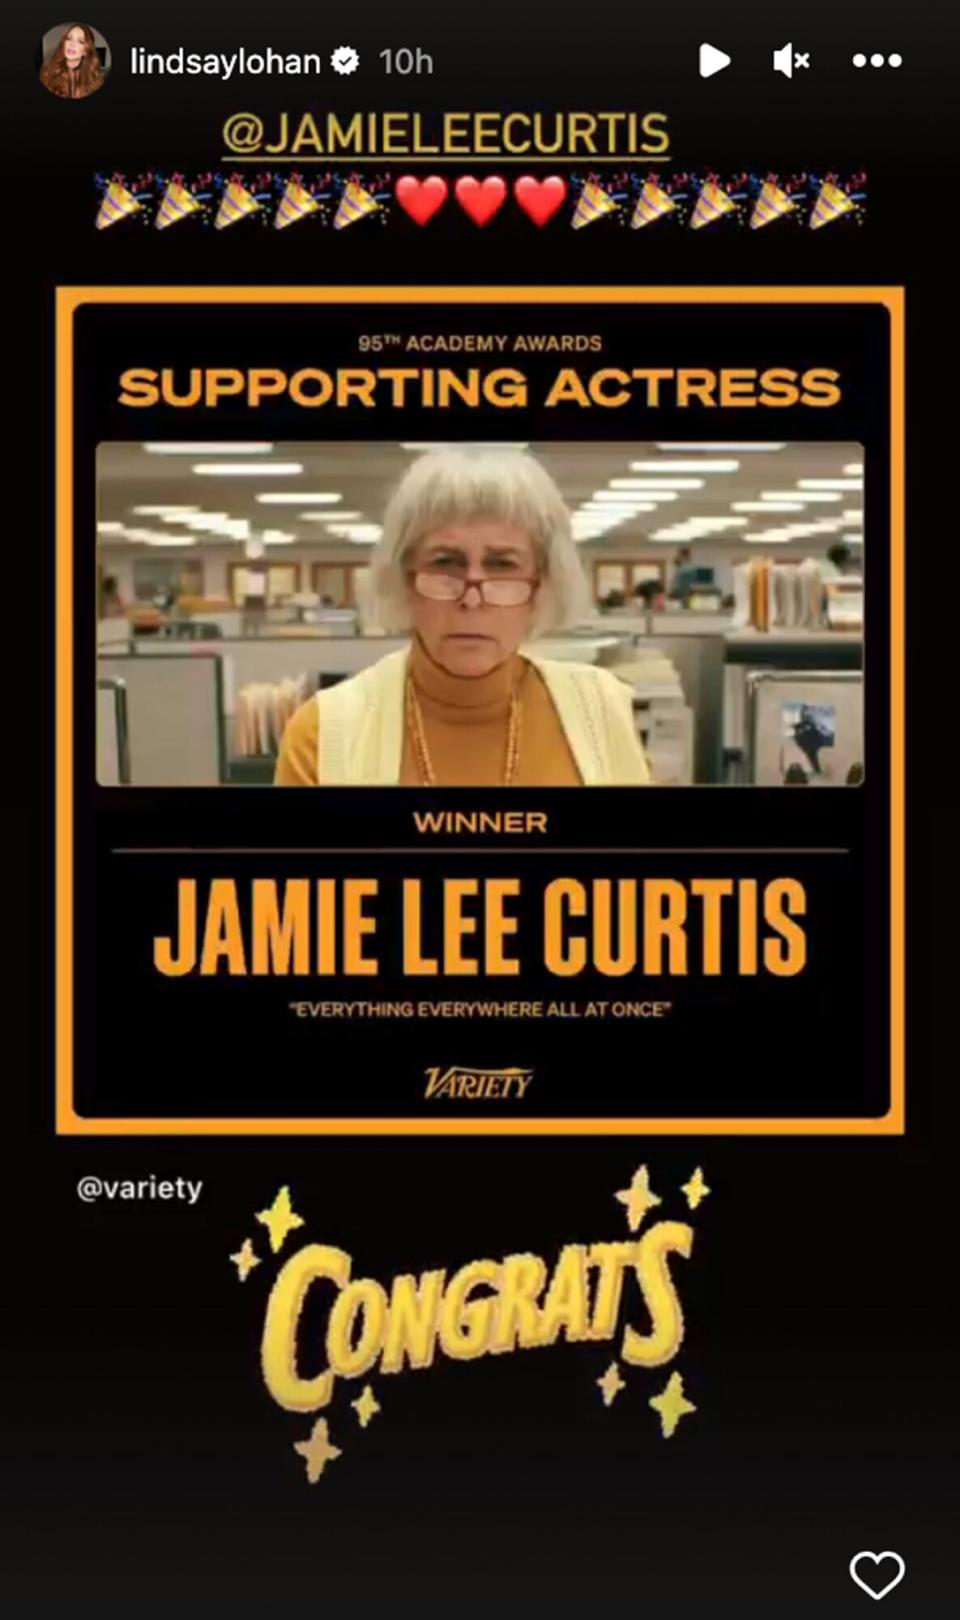 Lindsay Lohan supports Jamie Lee Curtis